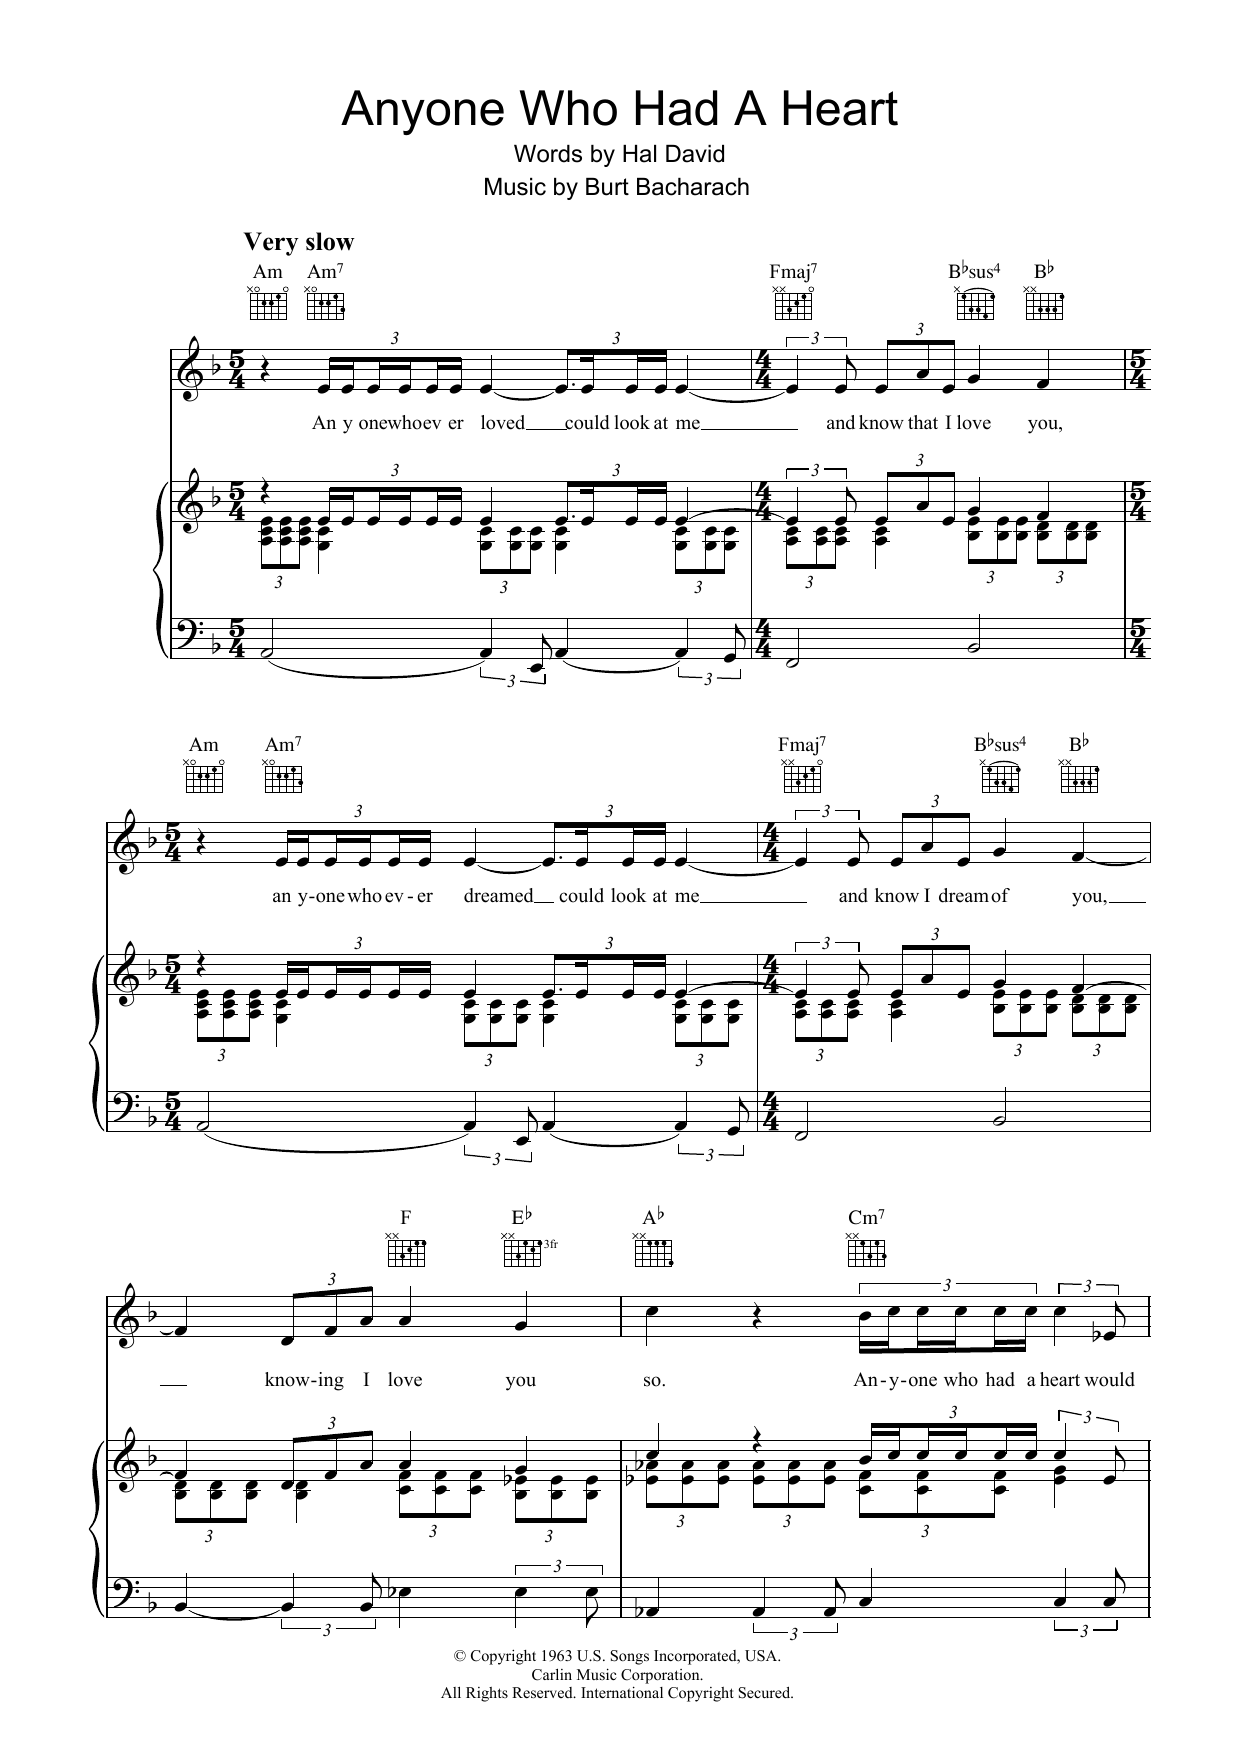 Bacharach & David Anyone Who Had A Heart Sheet Music Notes & Chords for Piano, Vocal & Guitar (Right-Hand Melody) - Download or Print PDF